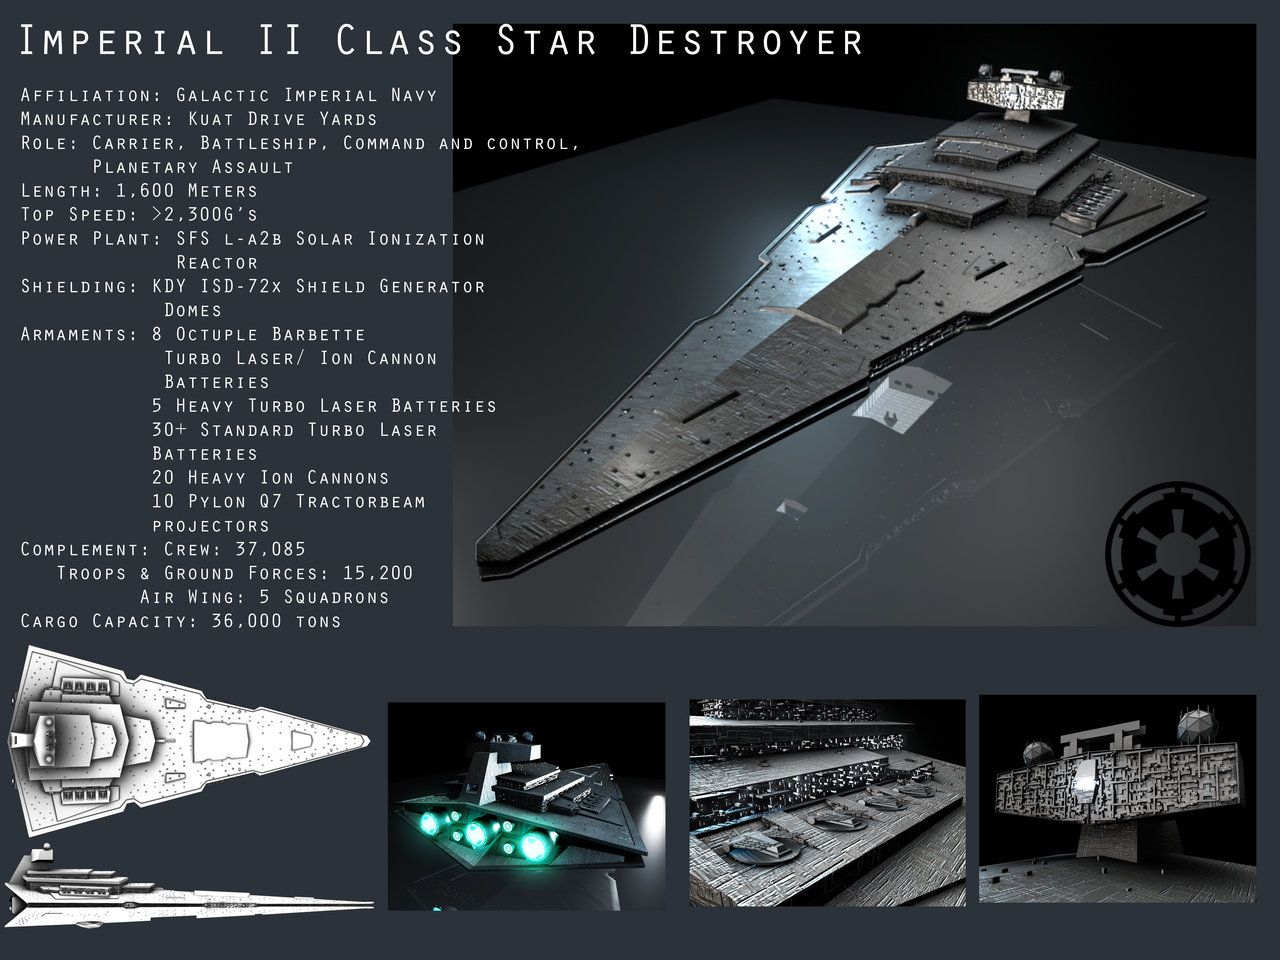 Executor Class Star Destroyer by Davis 237834 on DeviantArt